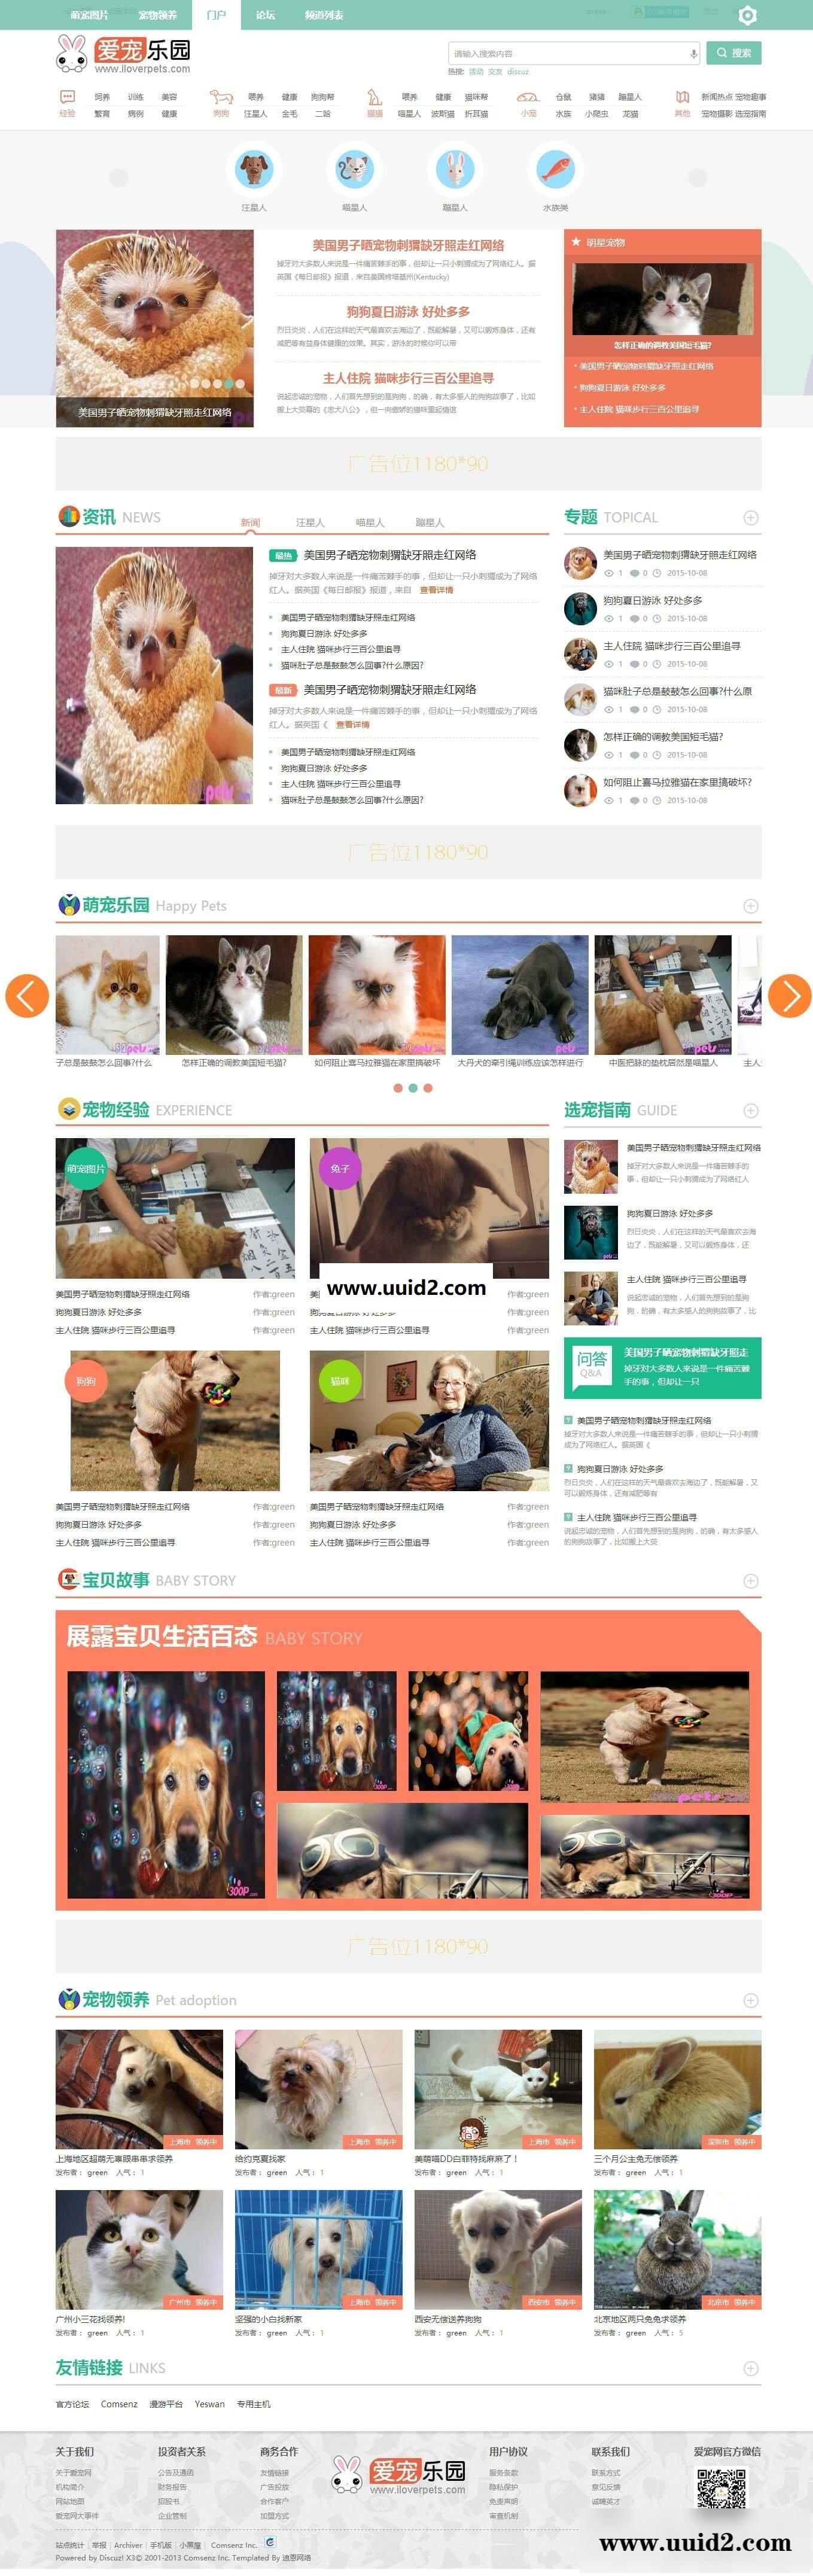 DZ论坛模板 宠物社区风格 商业版（GBK）宠物资讯交流论坛源码